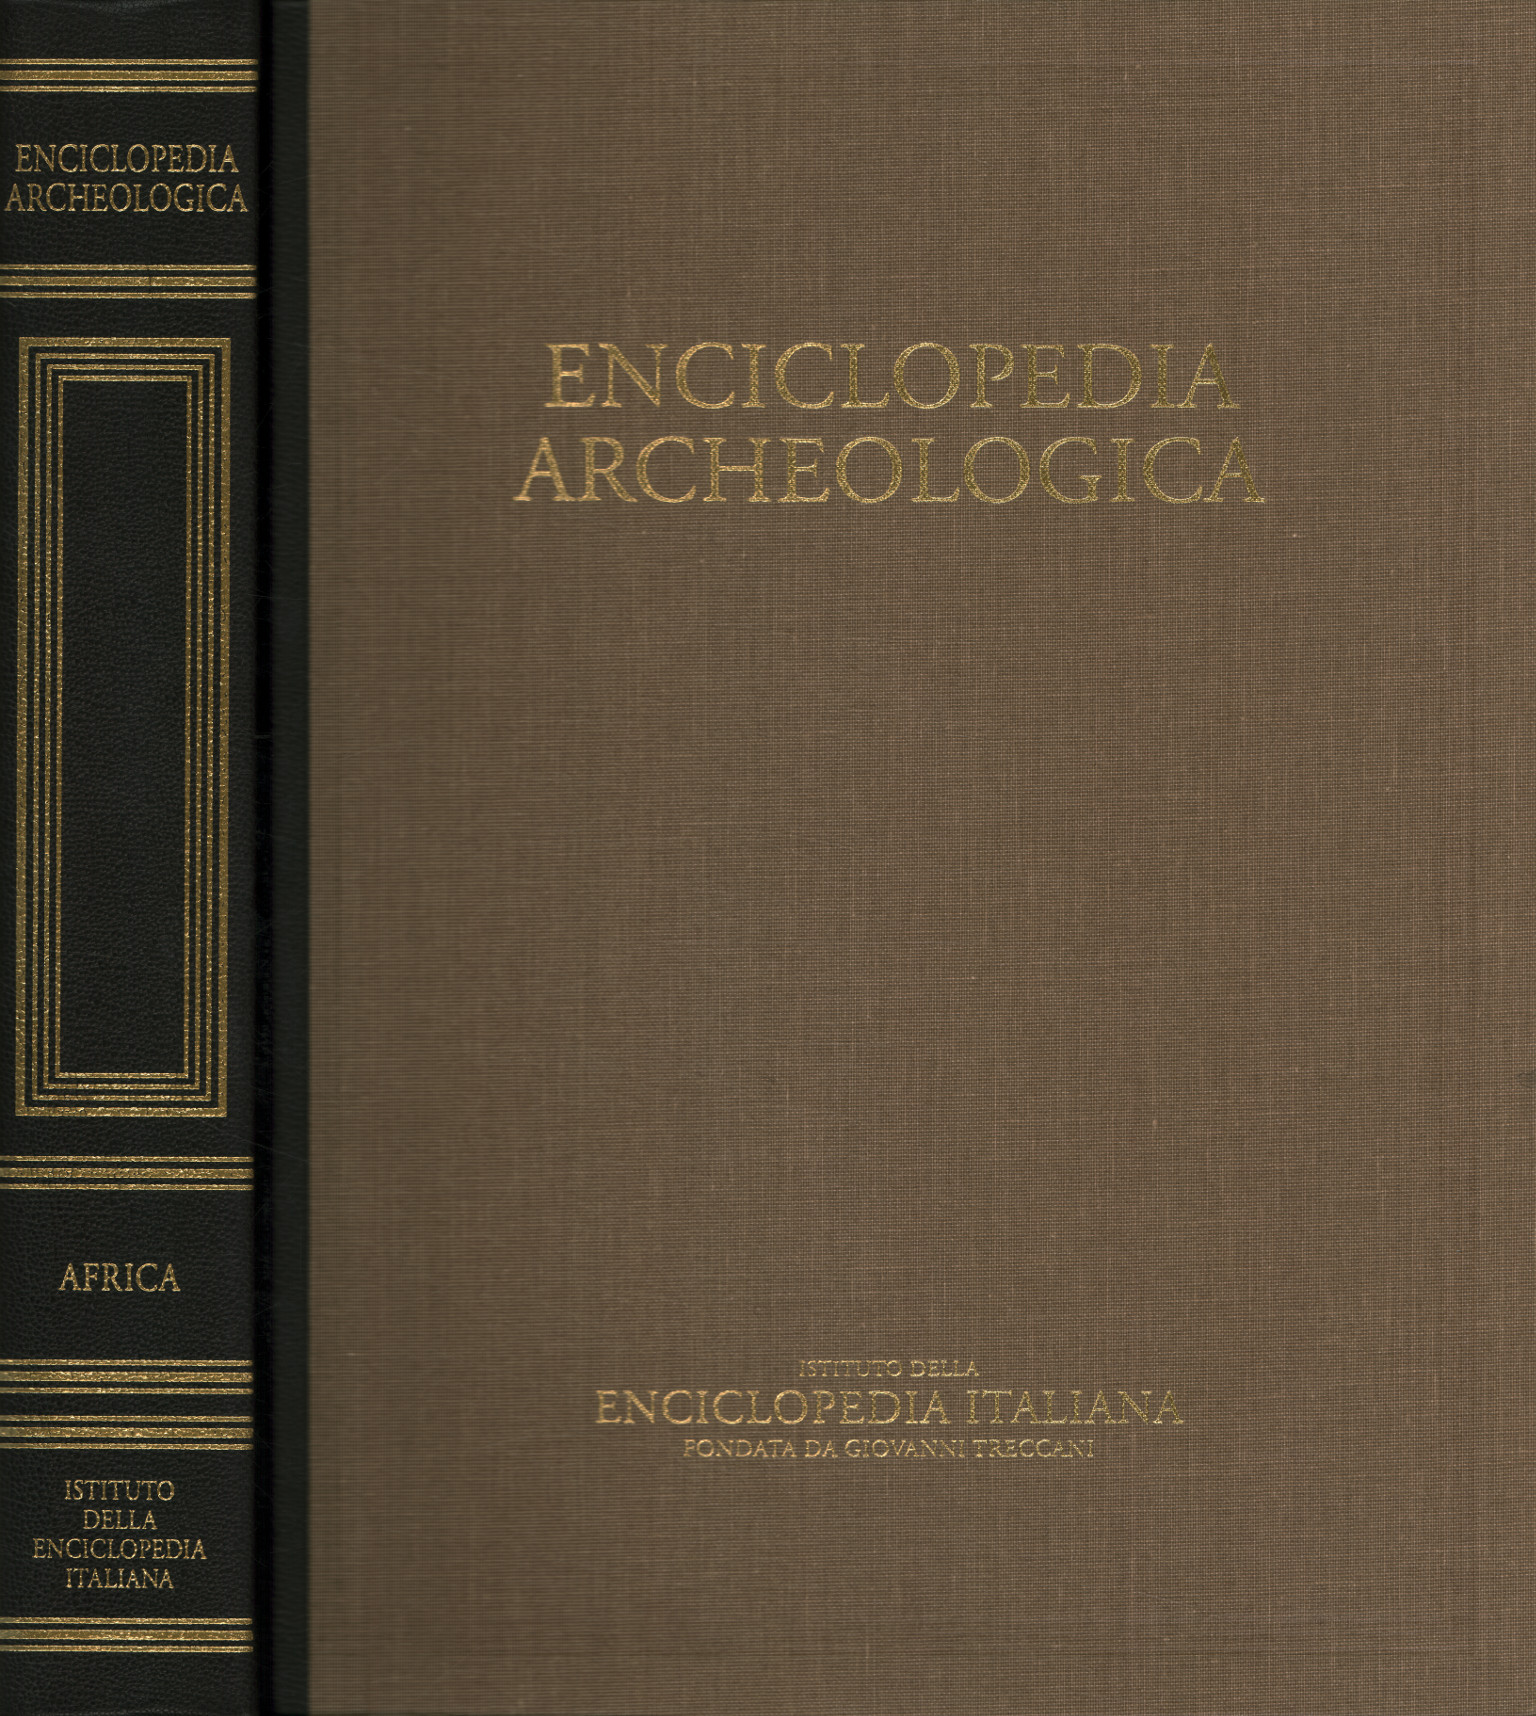 Archaeological encyclopedia. Africa